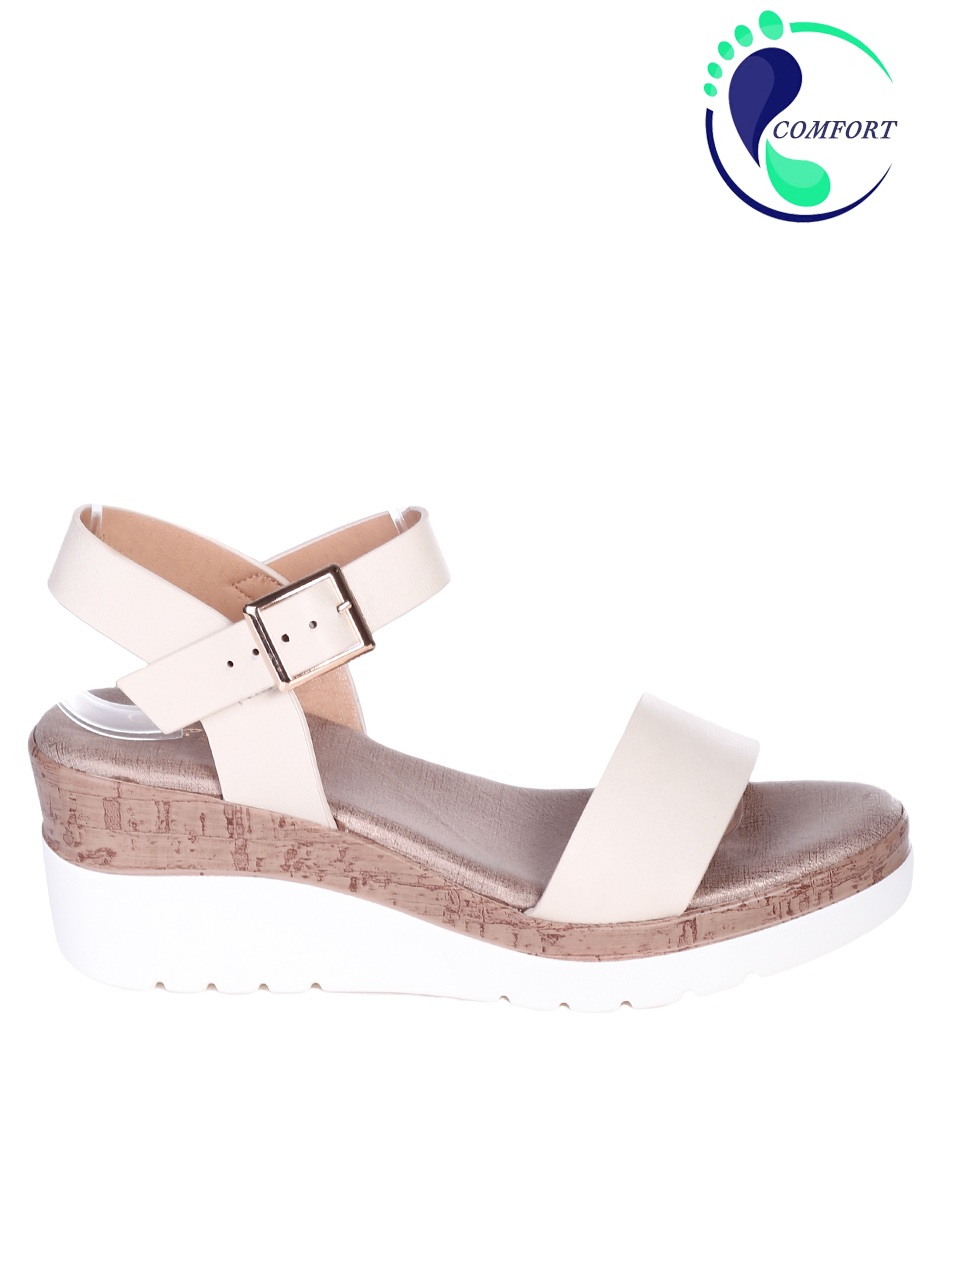 Ежедневни дамски сандали на платформа в бяло 4H-23124 white